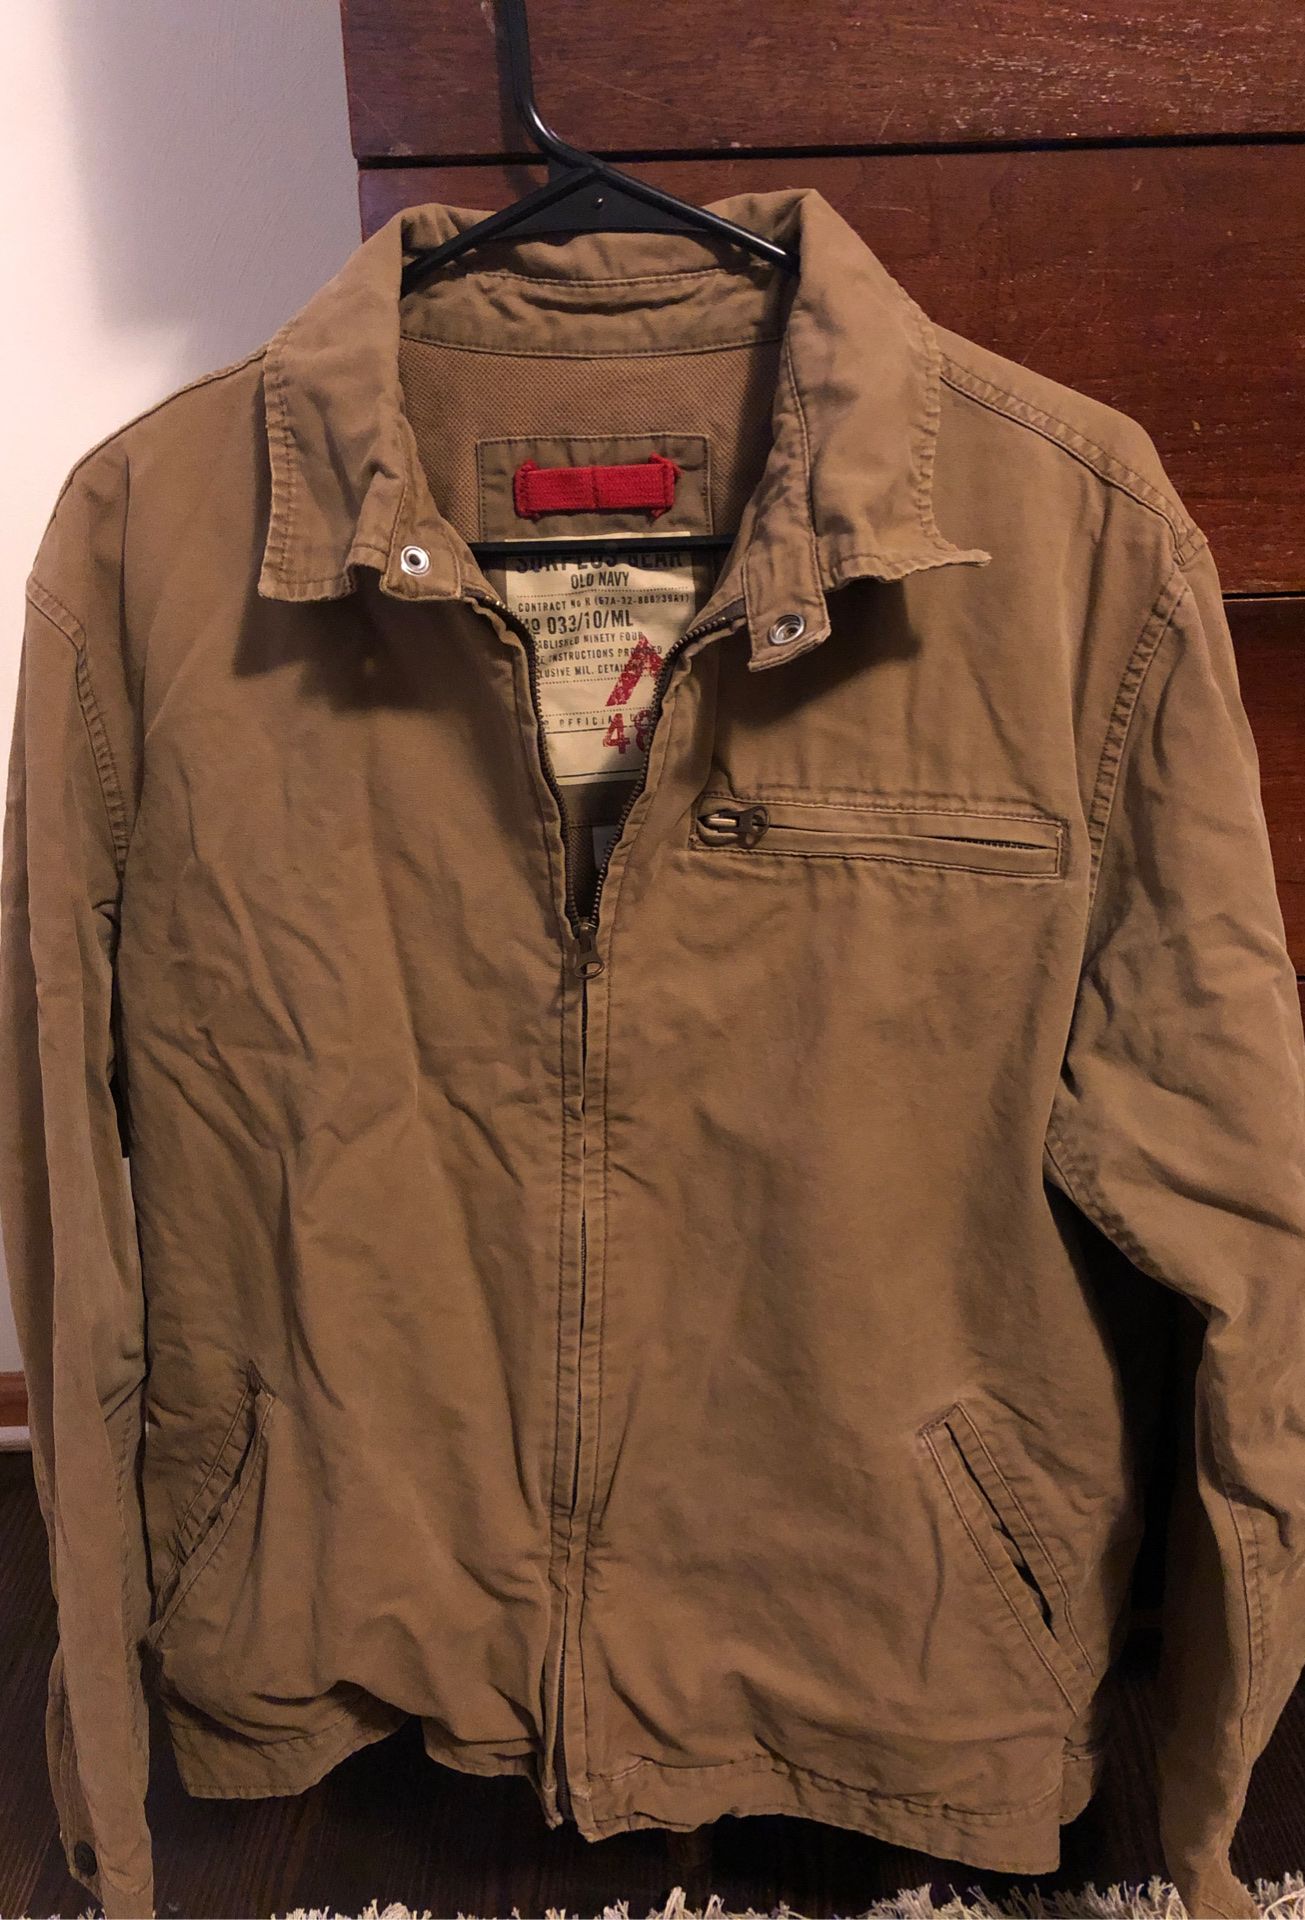 Old navy surplus jacket size medium